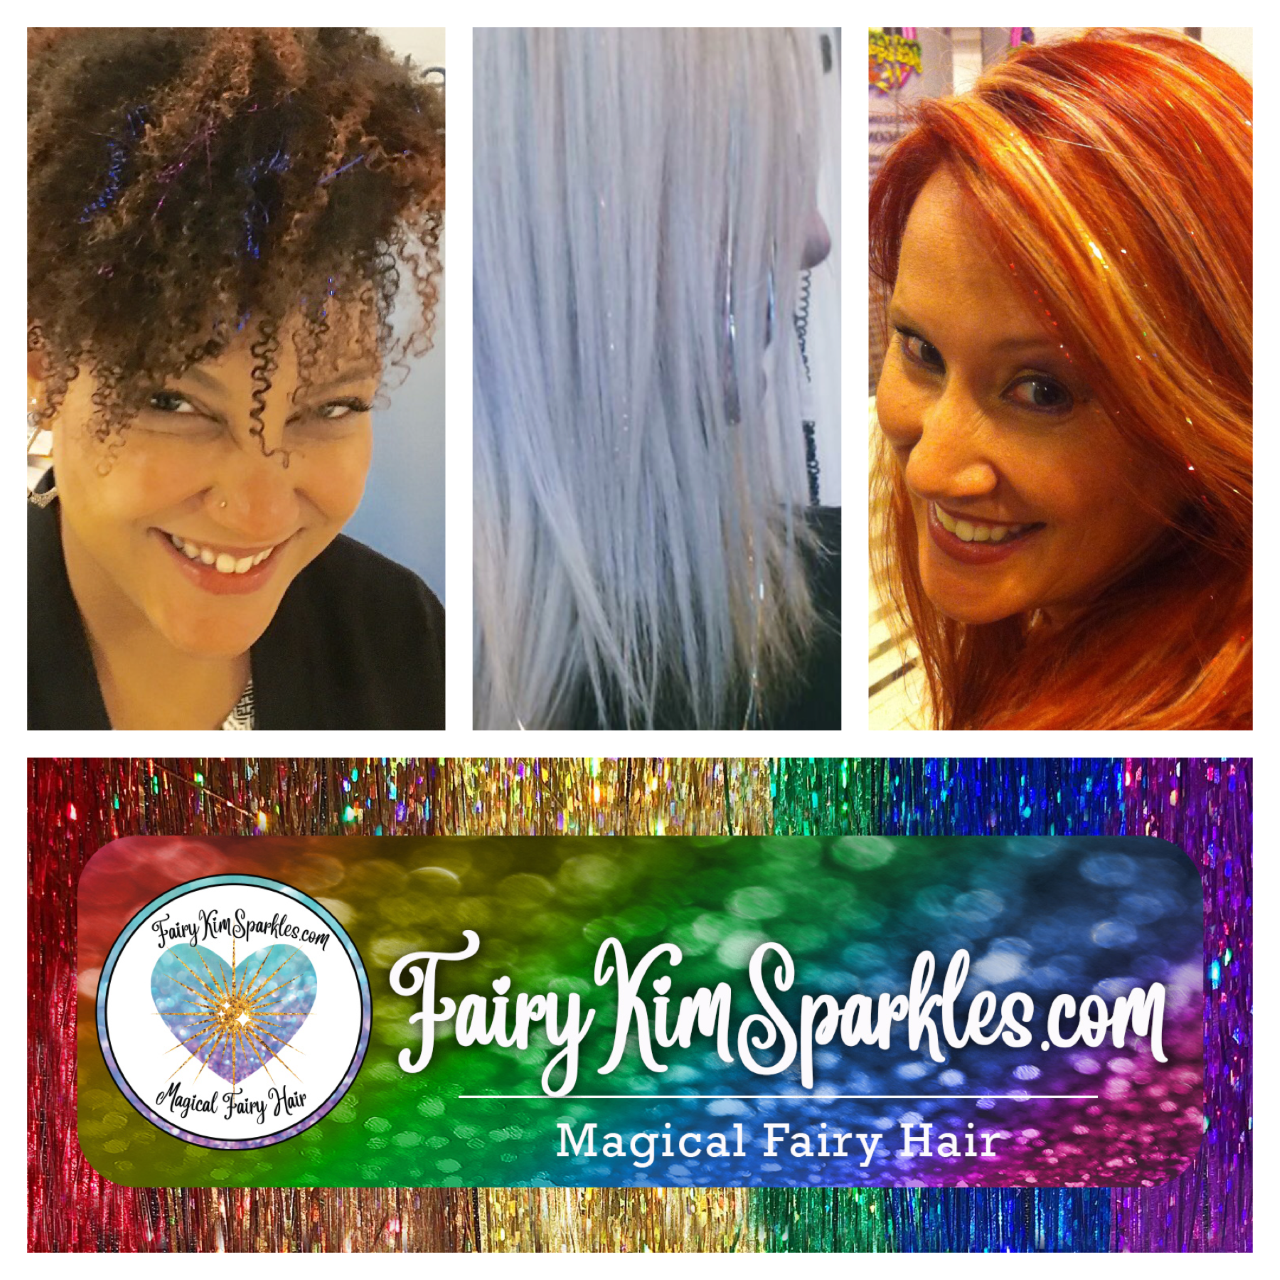 Fairy Hair Sparkles - The Laurel of Asheville